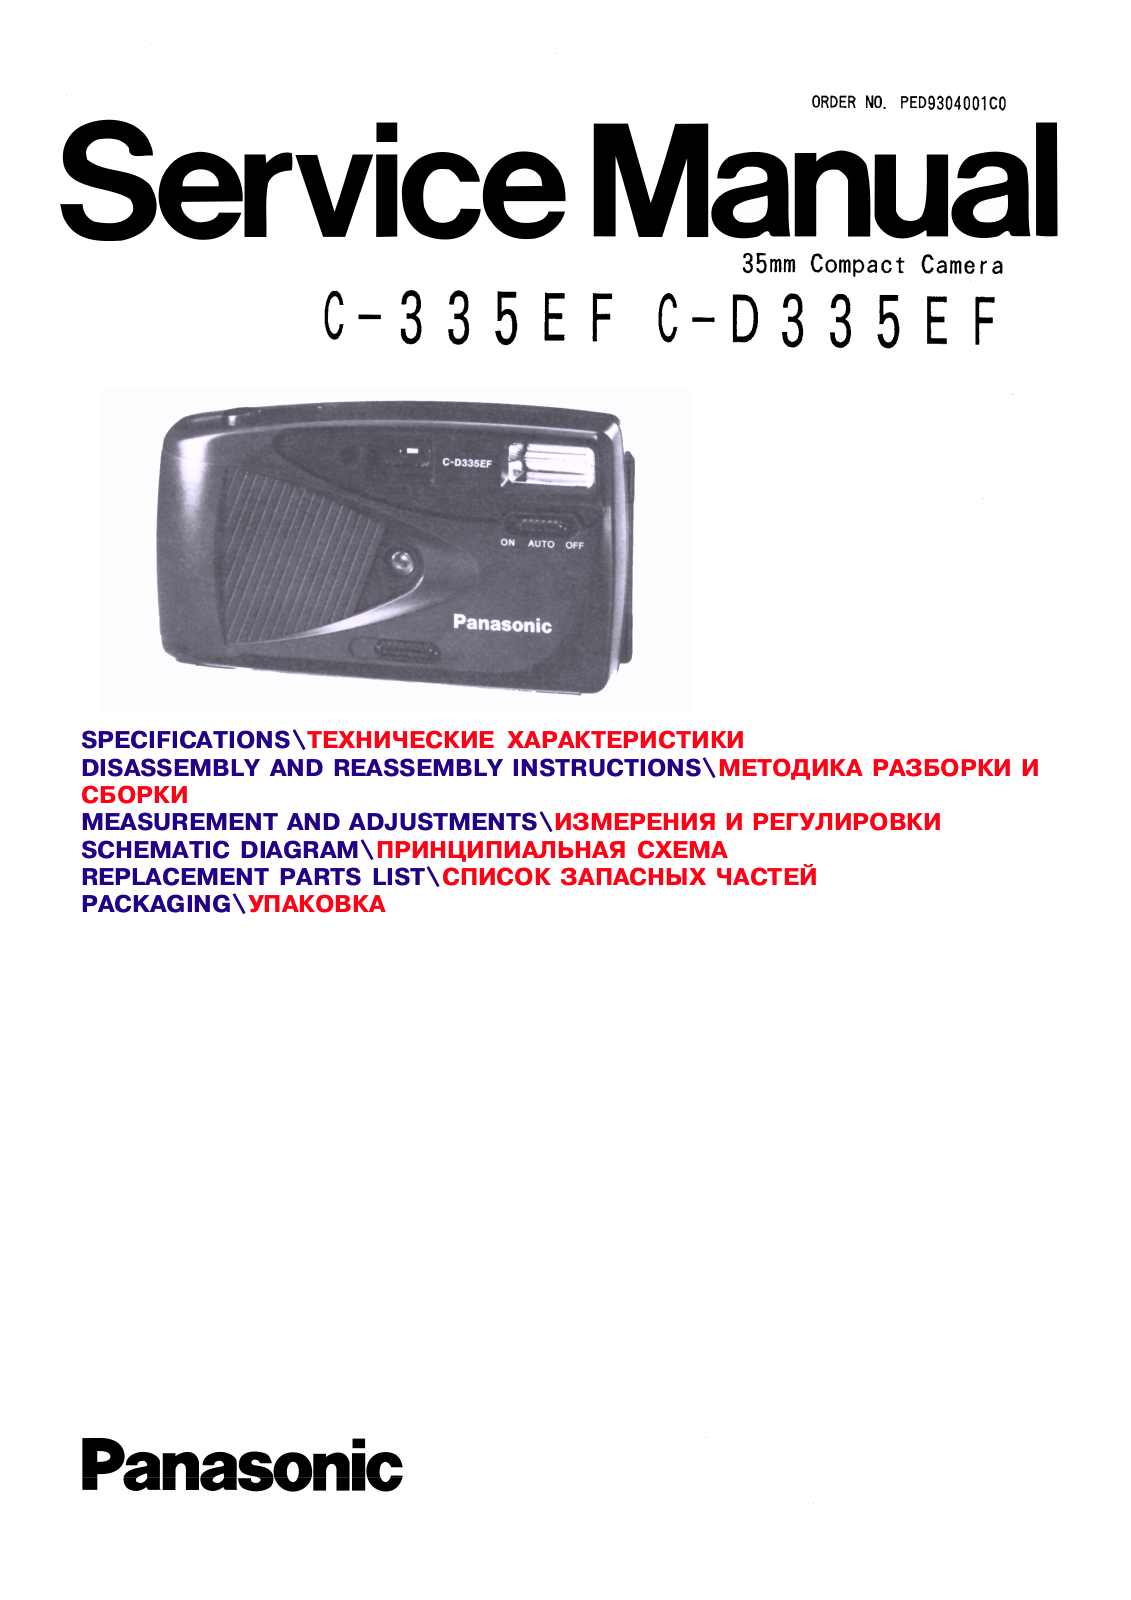 PANASONIC C-335EF, C-D335EF Service Manual